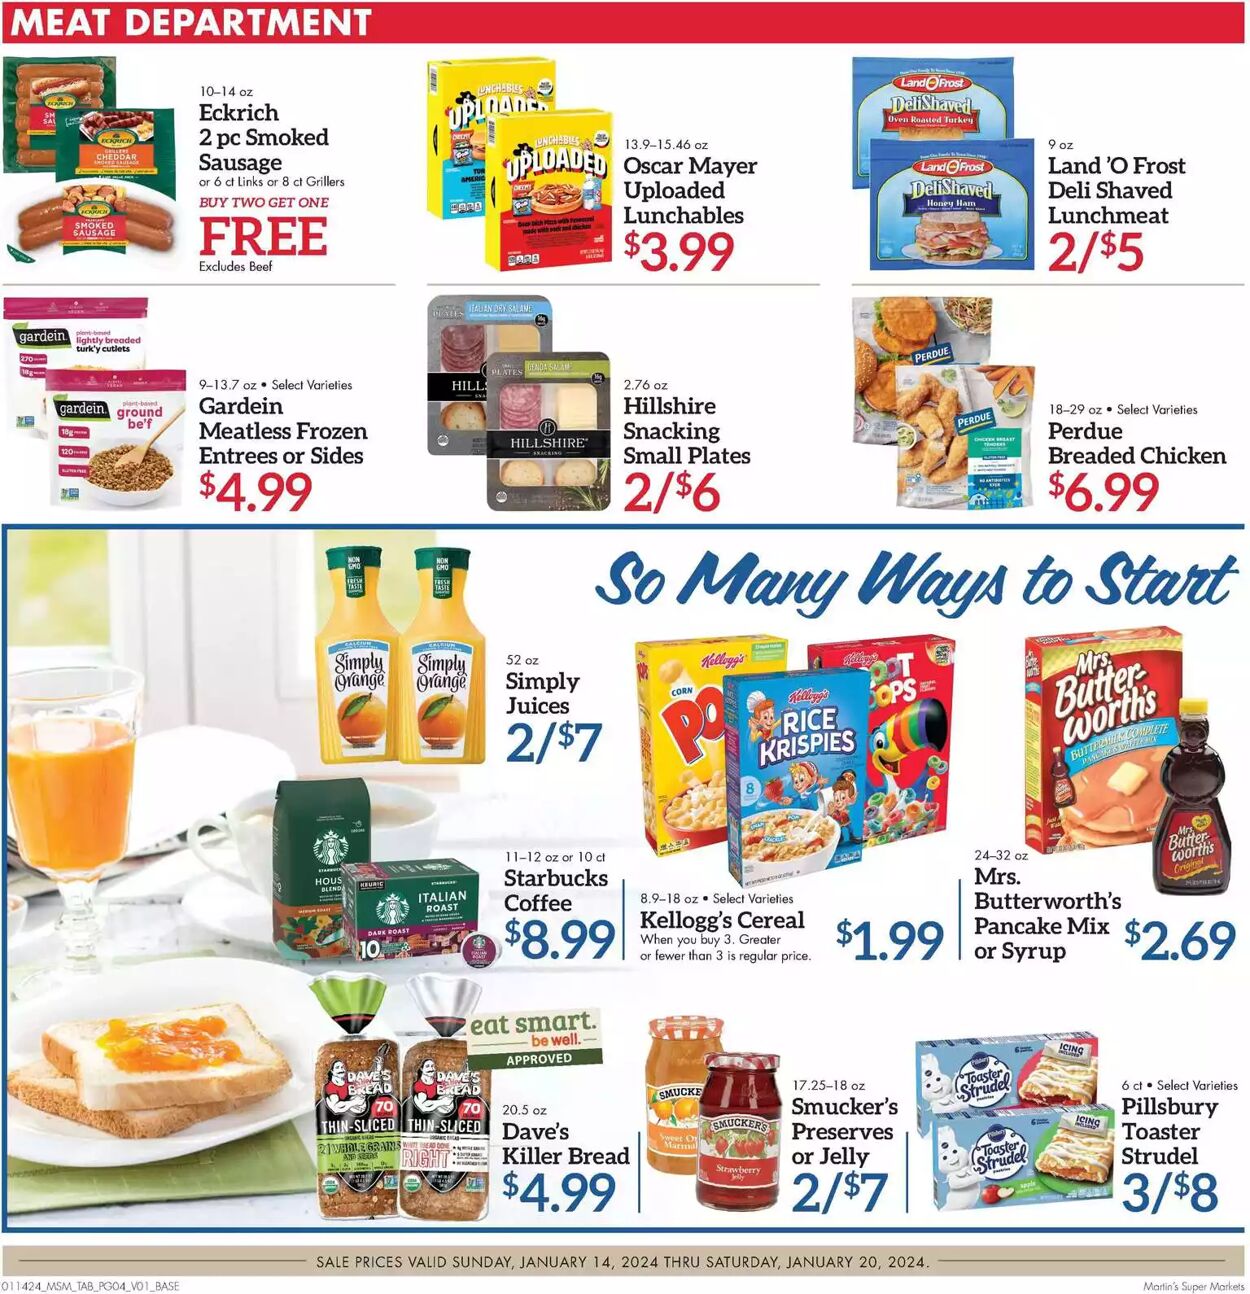 Weekly ad Martin's Supermarkets 01/14/2024 - 01/20/2024